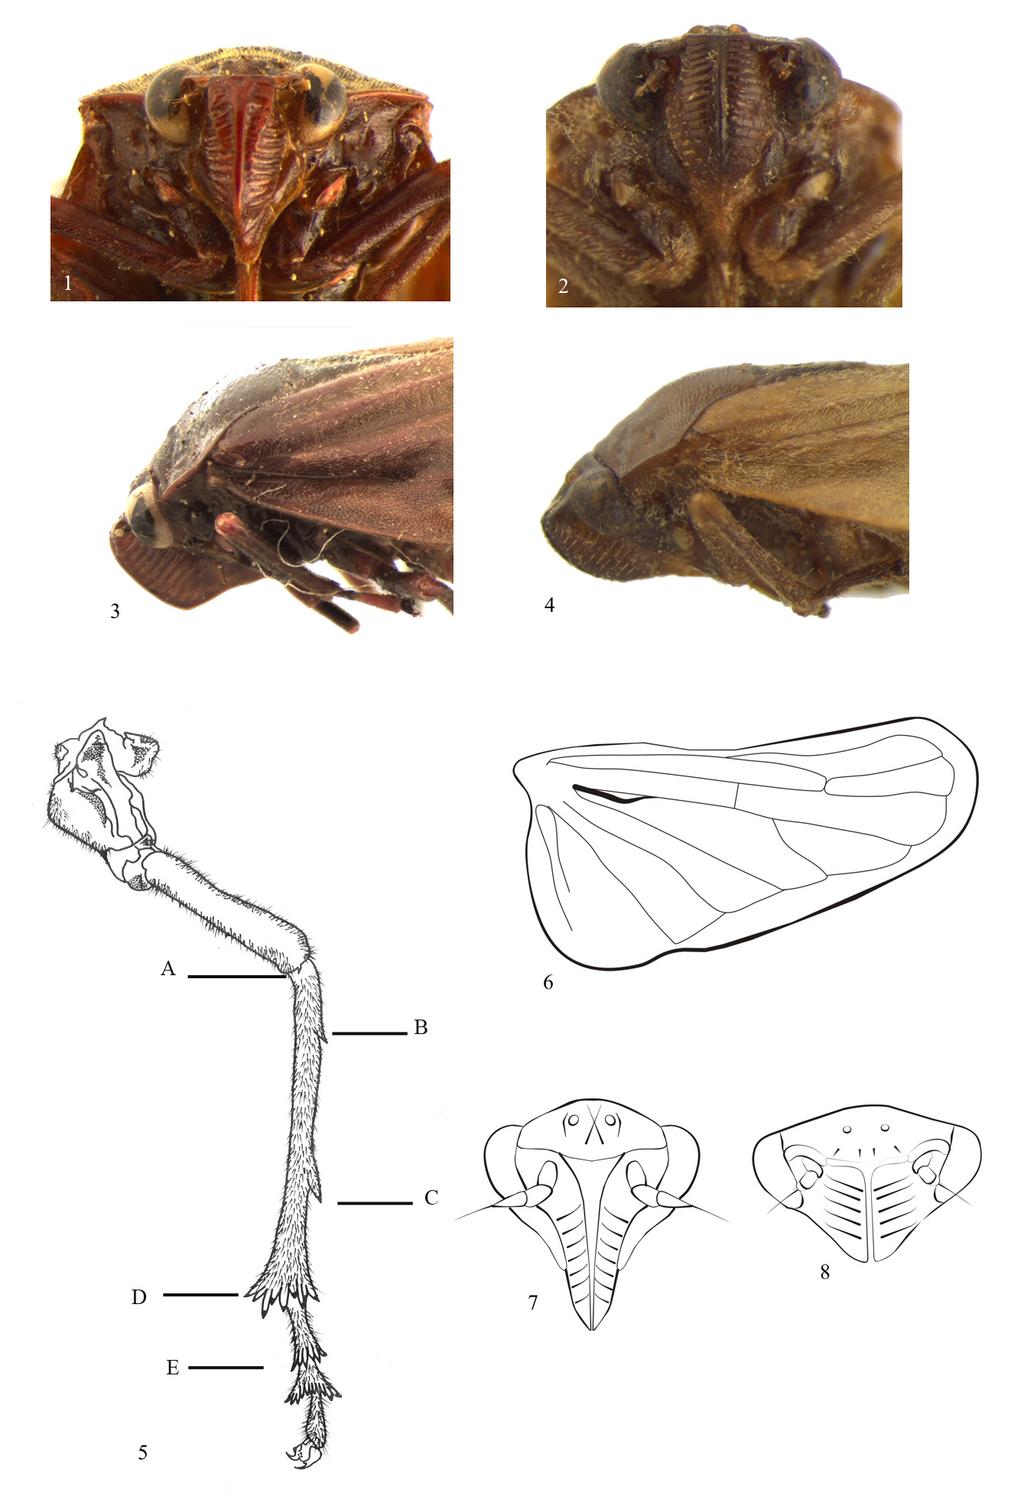 Figs. 1-8. Morfologia externa de Cercopidae. 1, M. quadriguttata, cabeça, vista ventral. 2, D. (D.) terrea, cabeça, vista ventral. 3, M. quadriguttata, cabeça, vista lateral. 4, D. (D.) terrea, vista lateral.